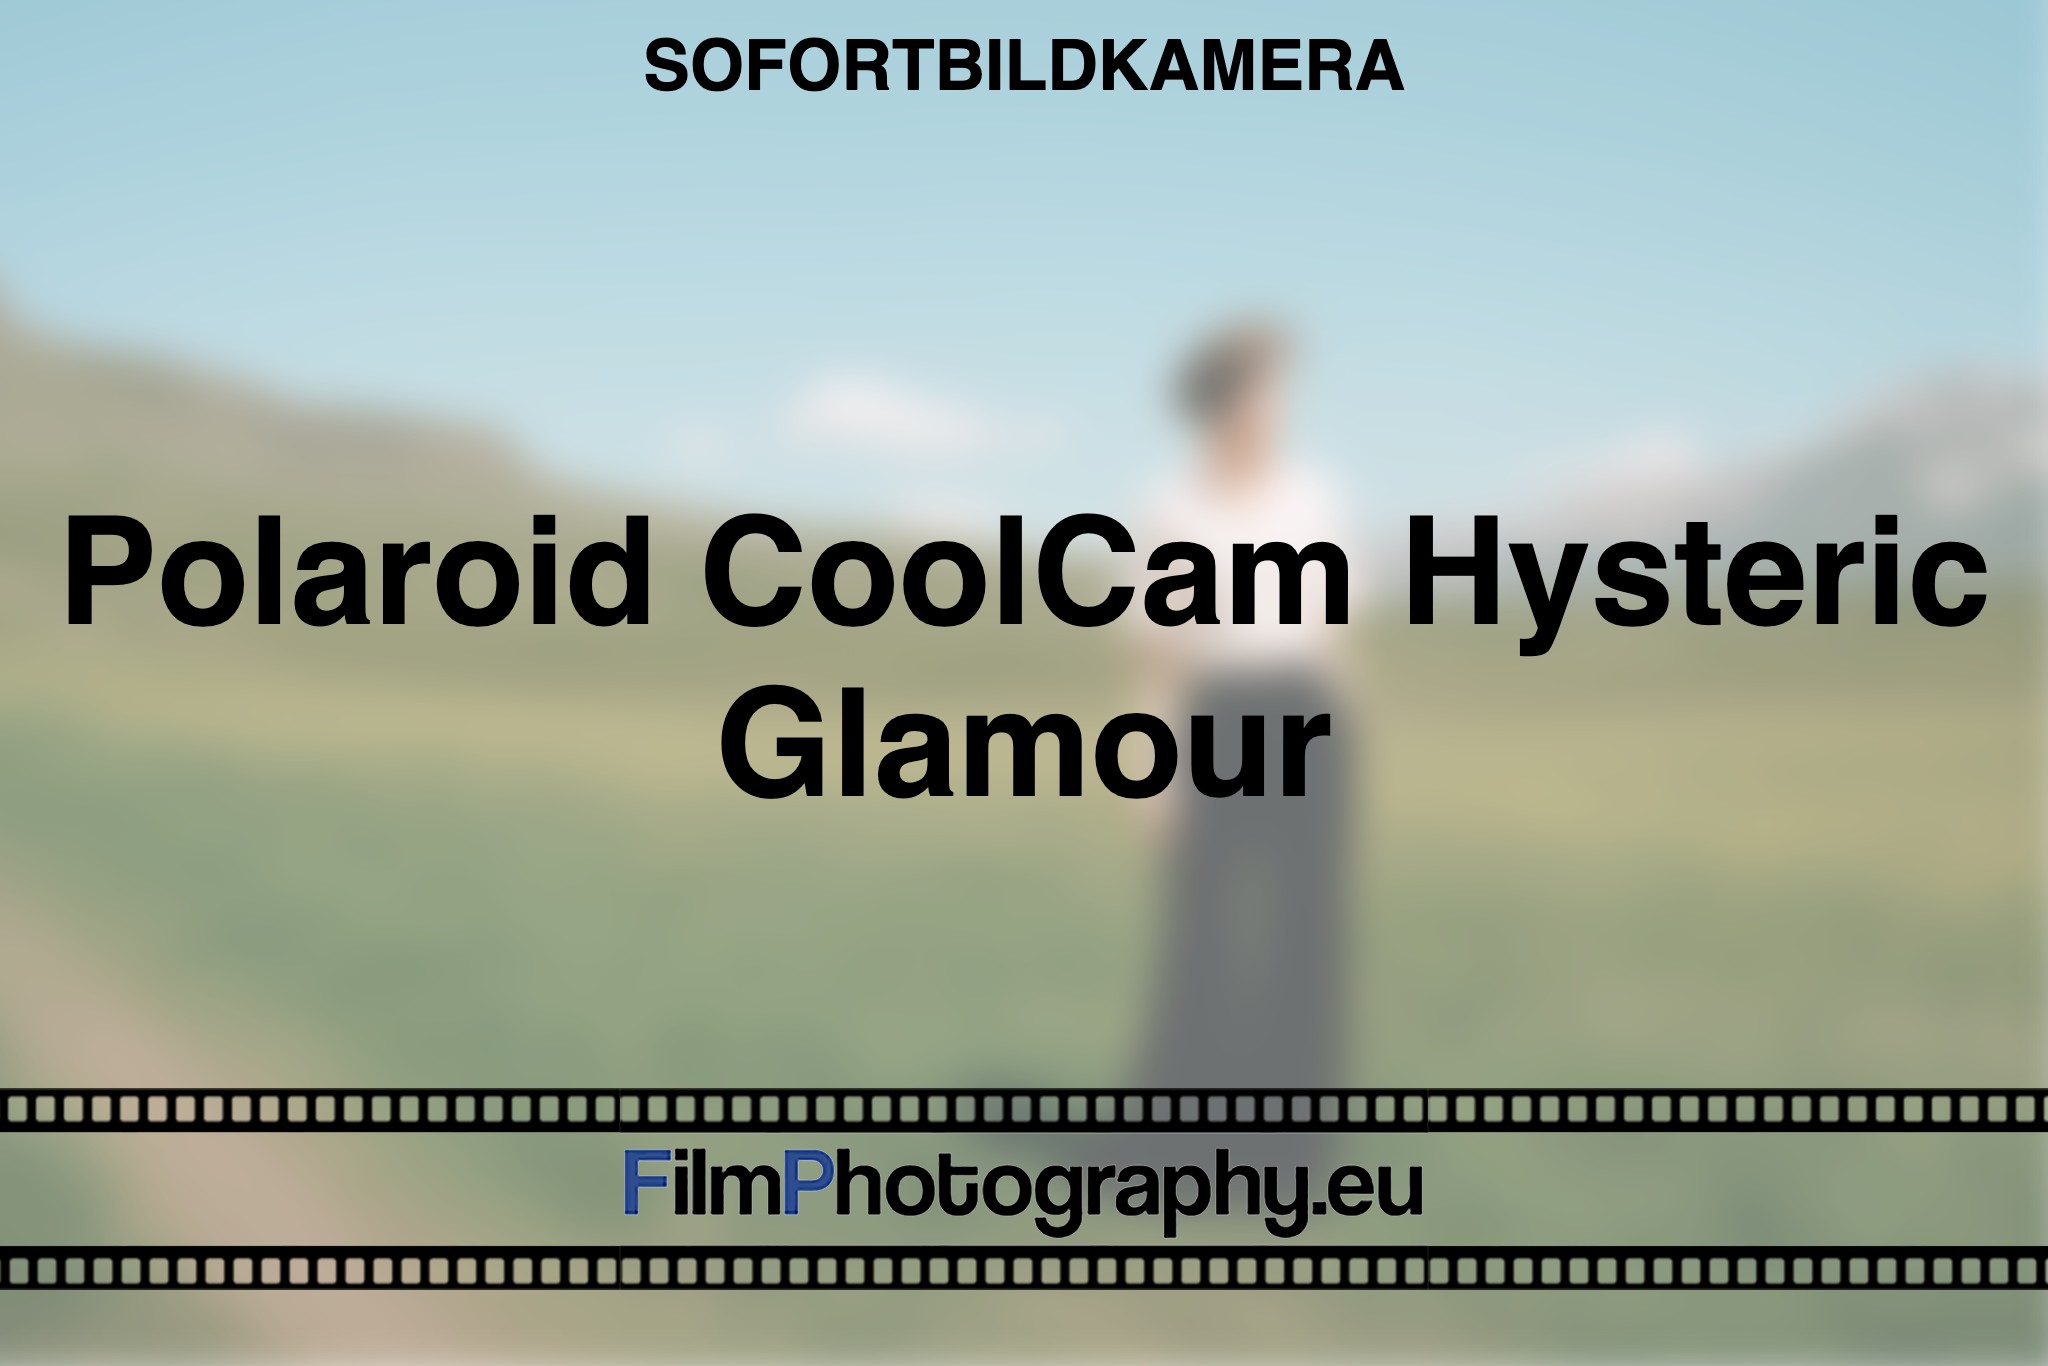 polaroid-coolcam-hysteric-glamour-sofortbildkamera-bnv